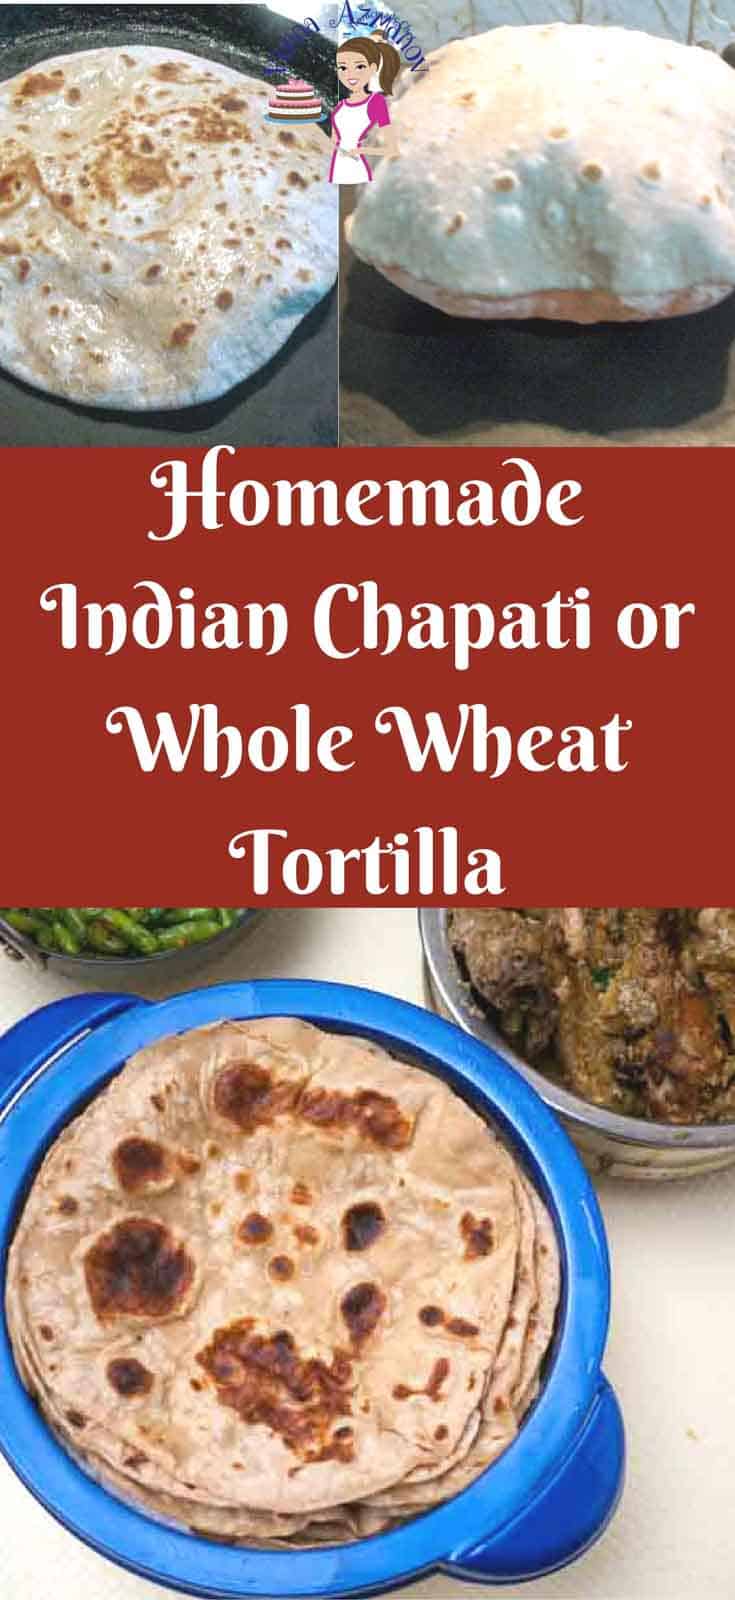 How to make Indian Chapati or Whole Wheat Tortilla - Veena Azmanov